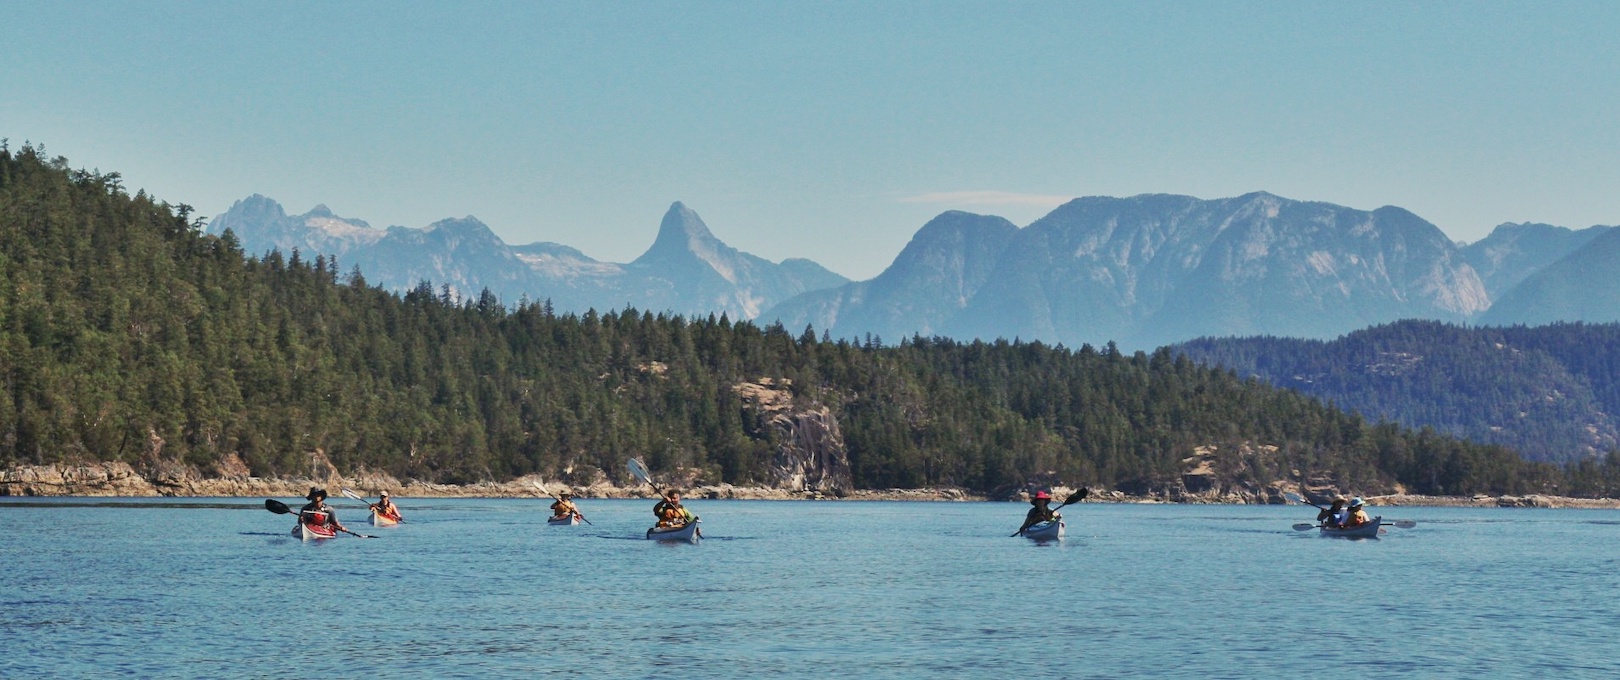 group of kayakers paddling